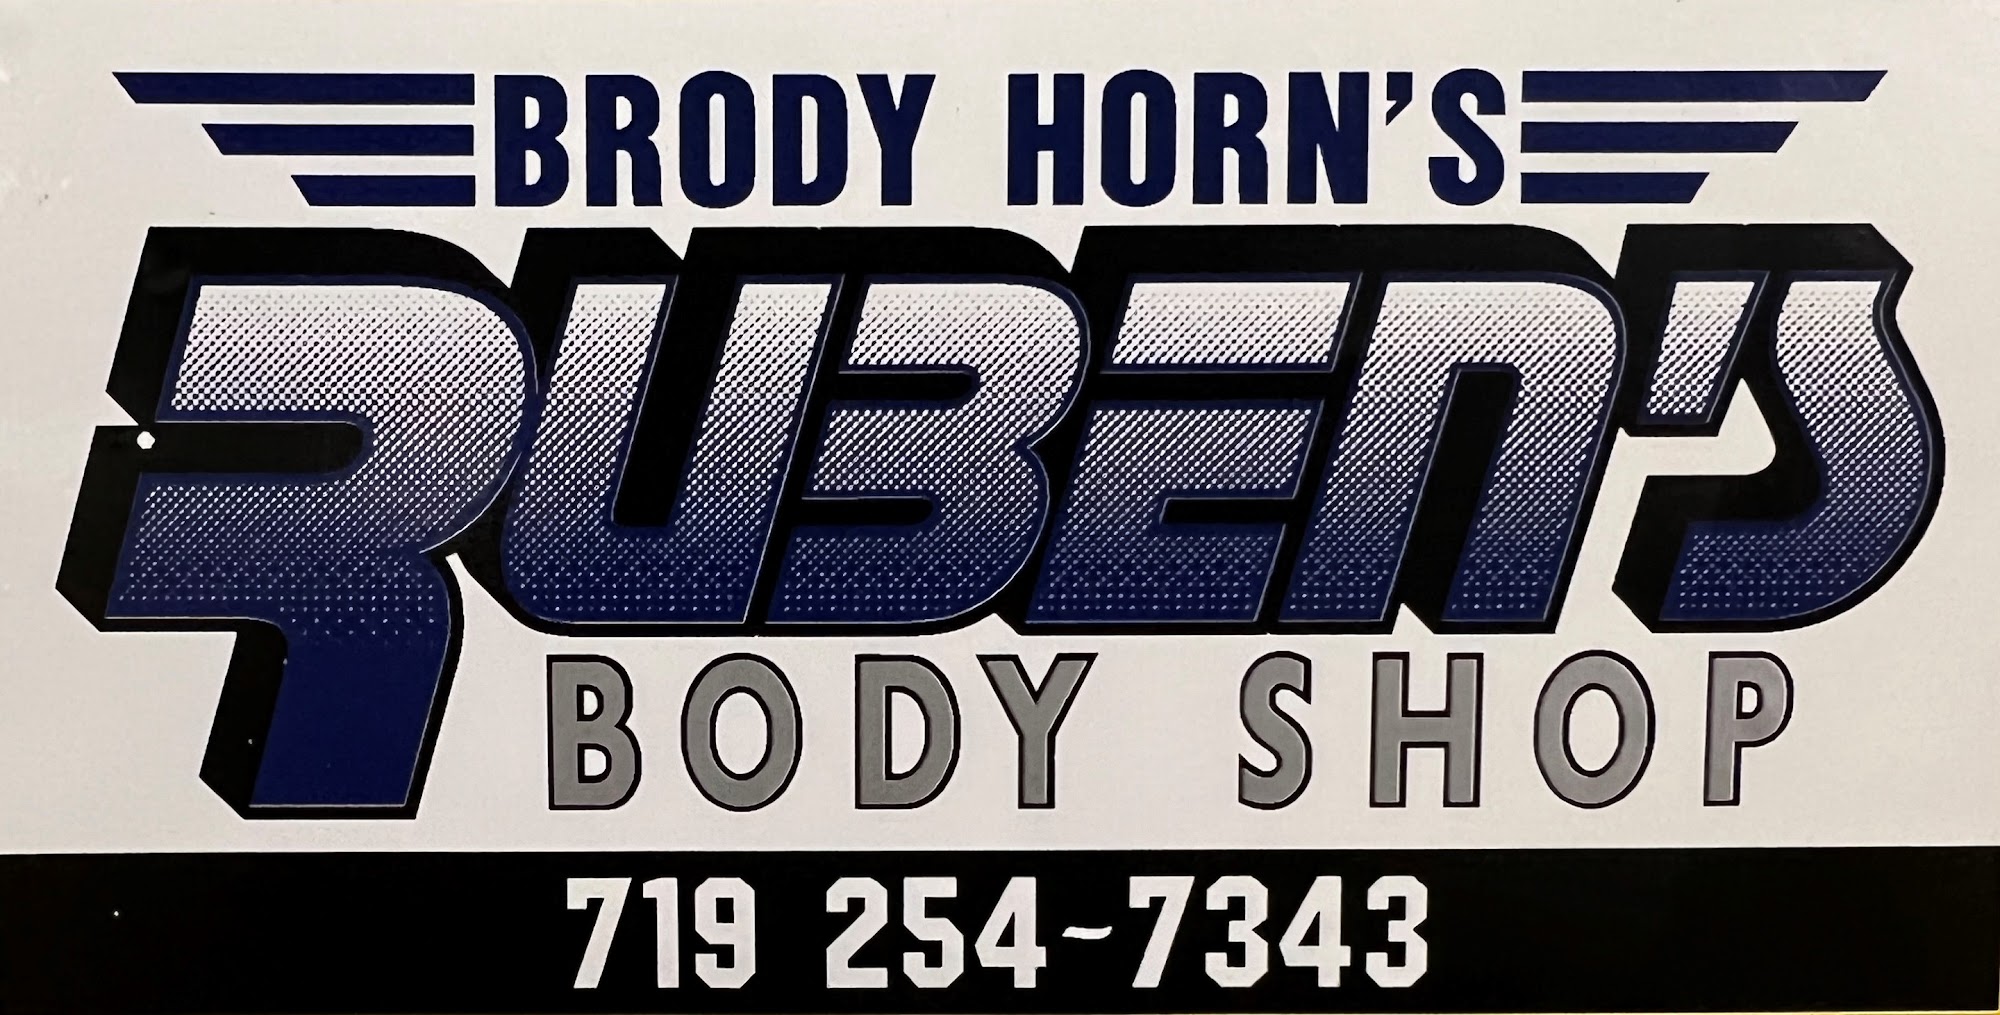 Ruben's Body Shop 1001 Swink Ave, Rocky Ford Colorado 81067